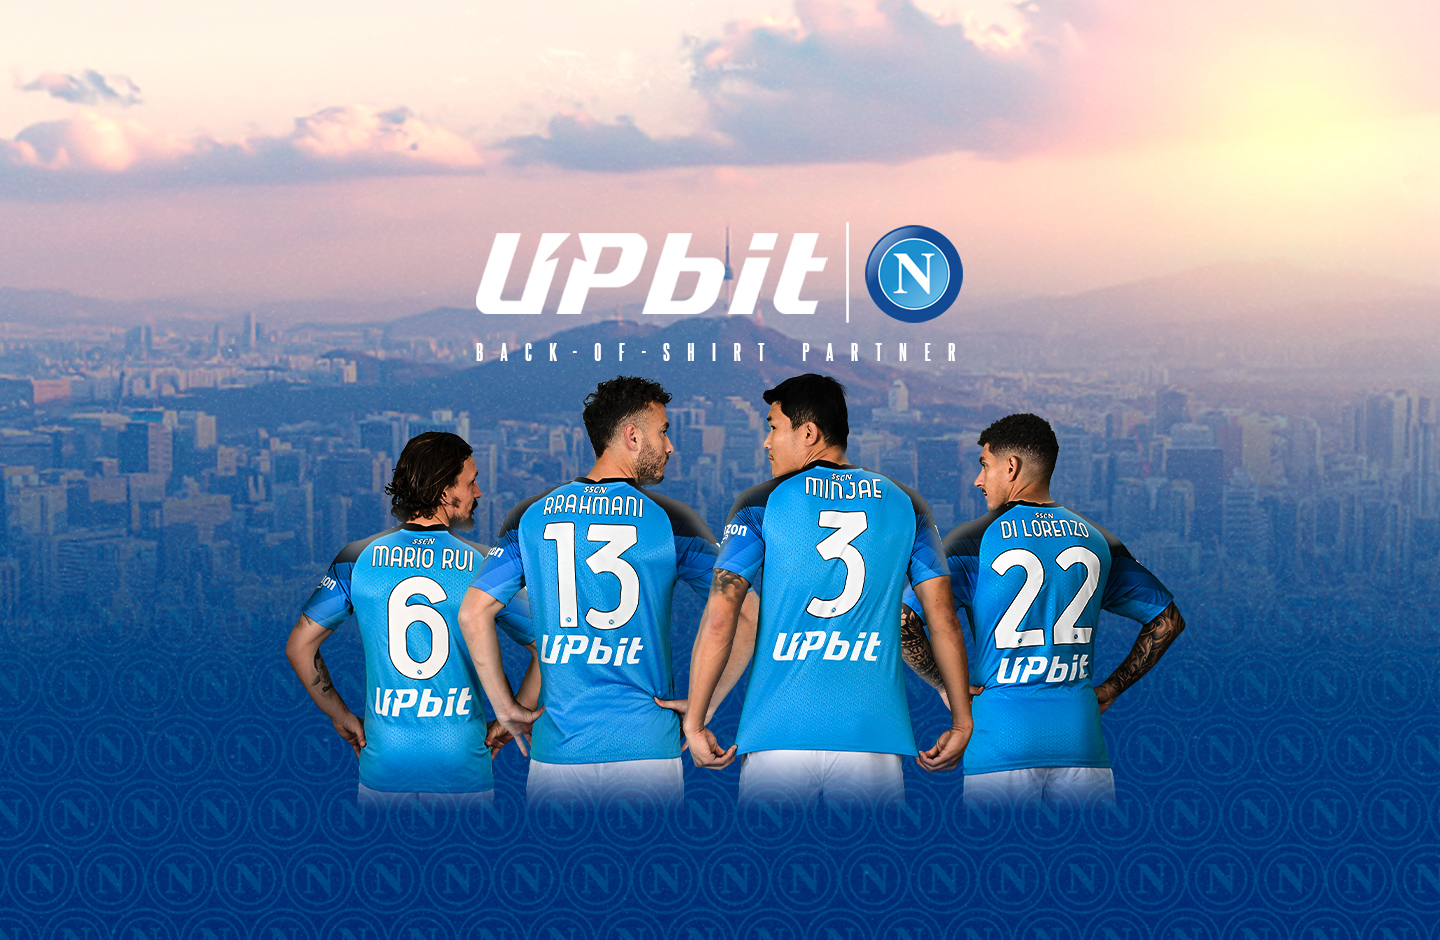 Crypto Exchange Upbit 로고, 이탈리아 축구 클럽 Napoli의 유니폼에 표시